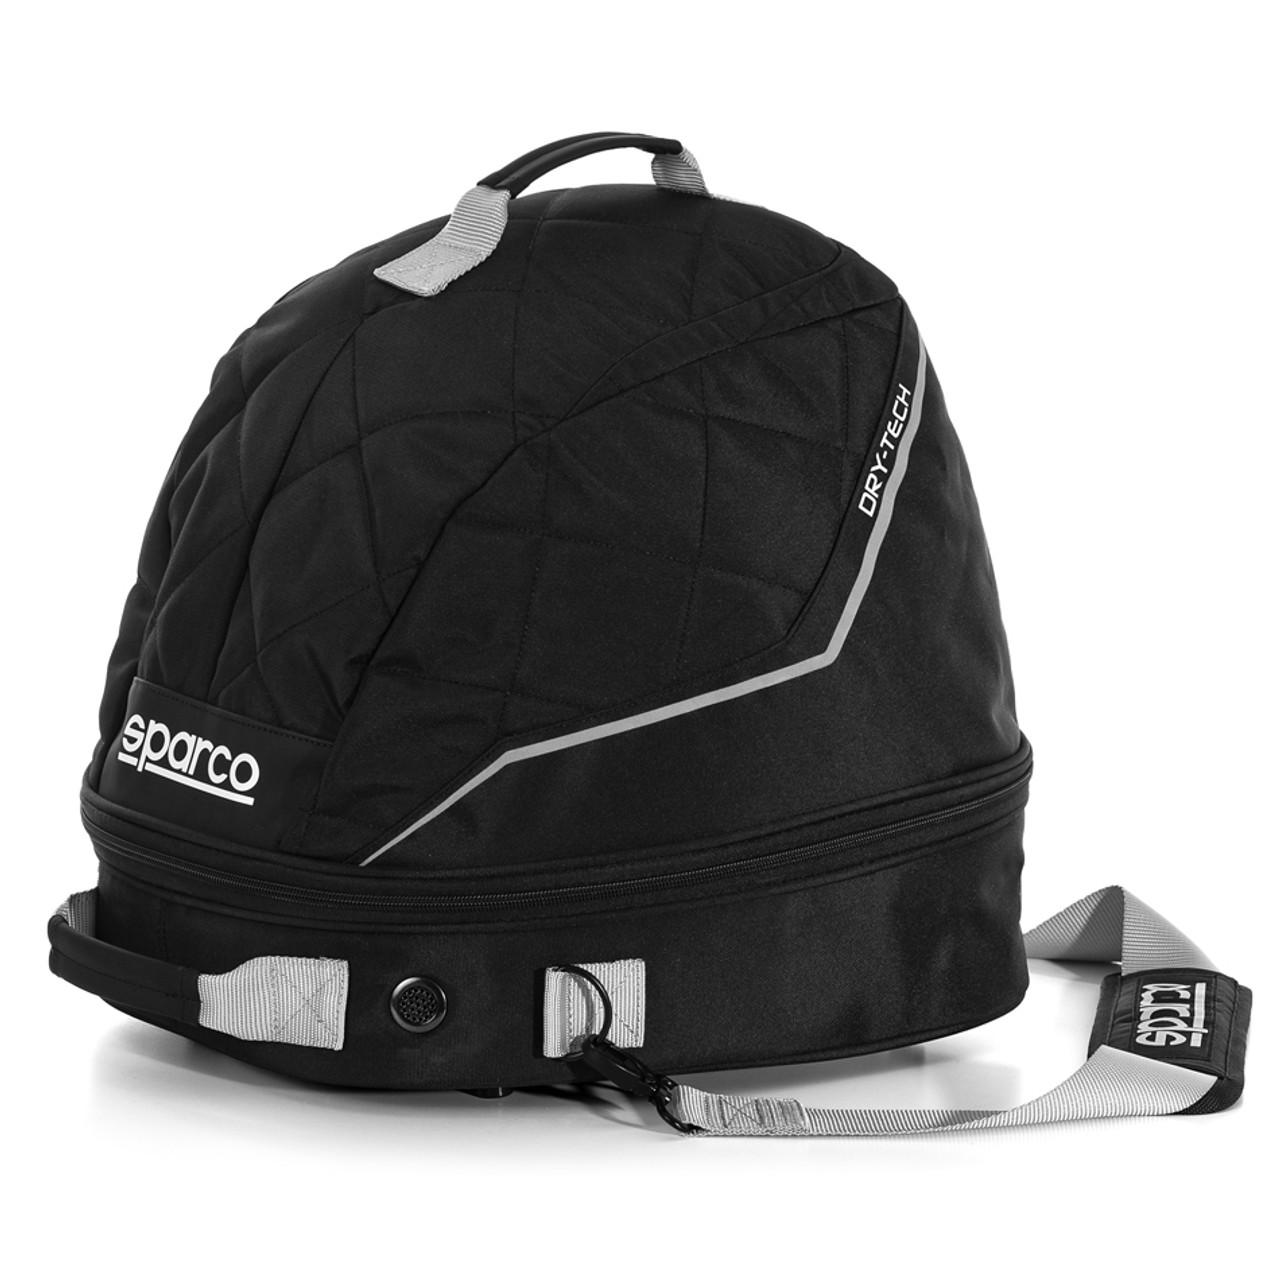 Sparco Helmet Bag Dry Tech Black / Silver - SCO016441NRSI